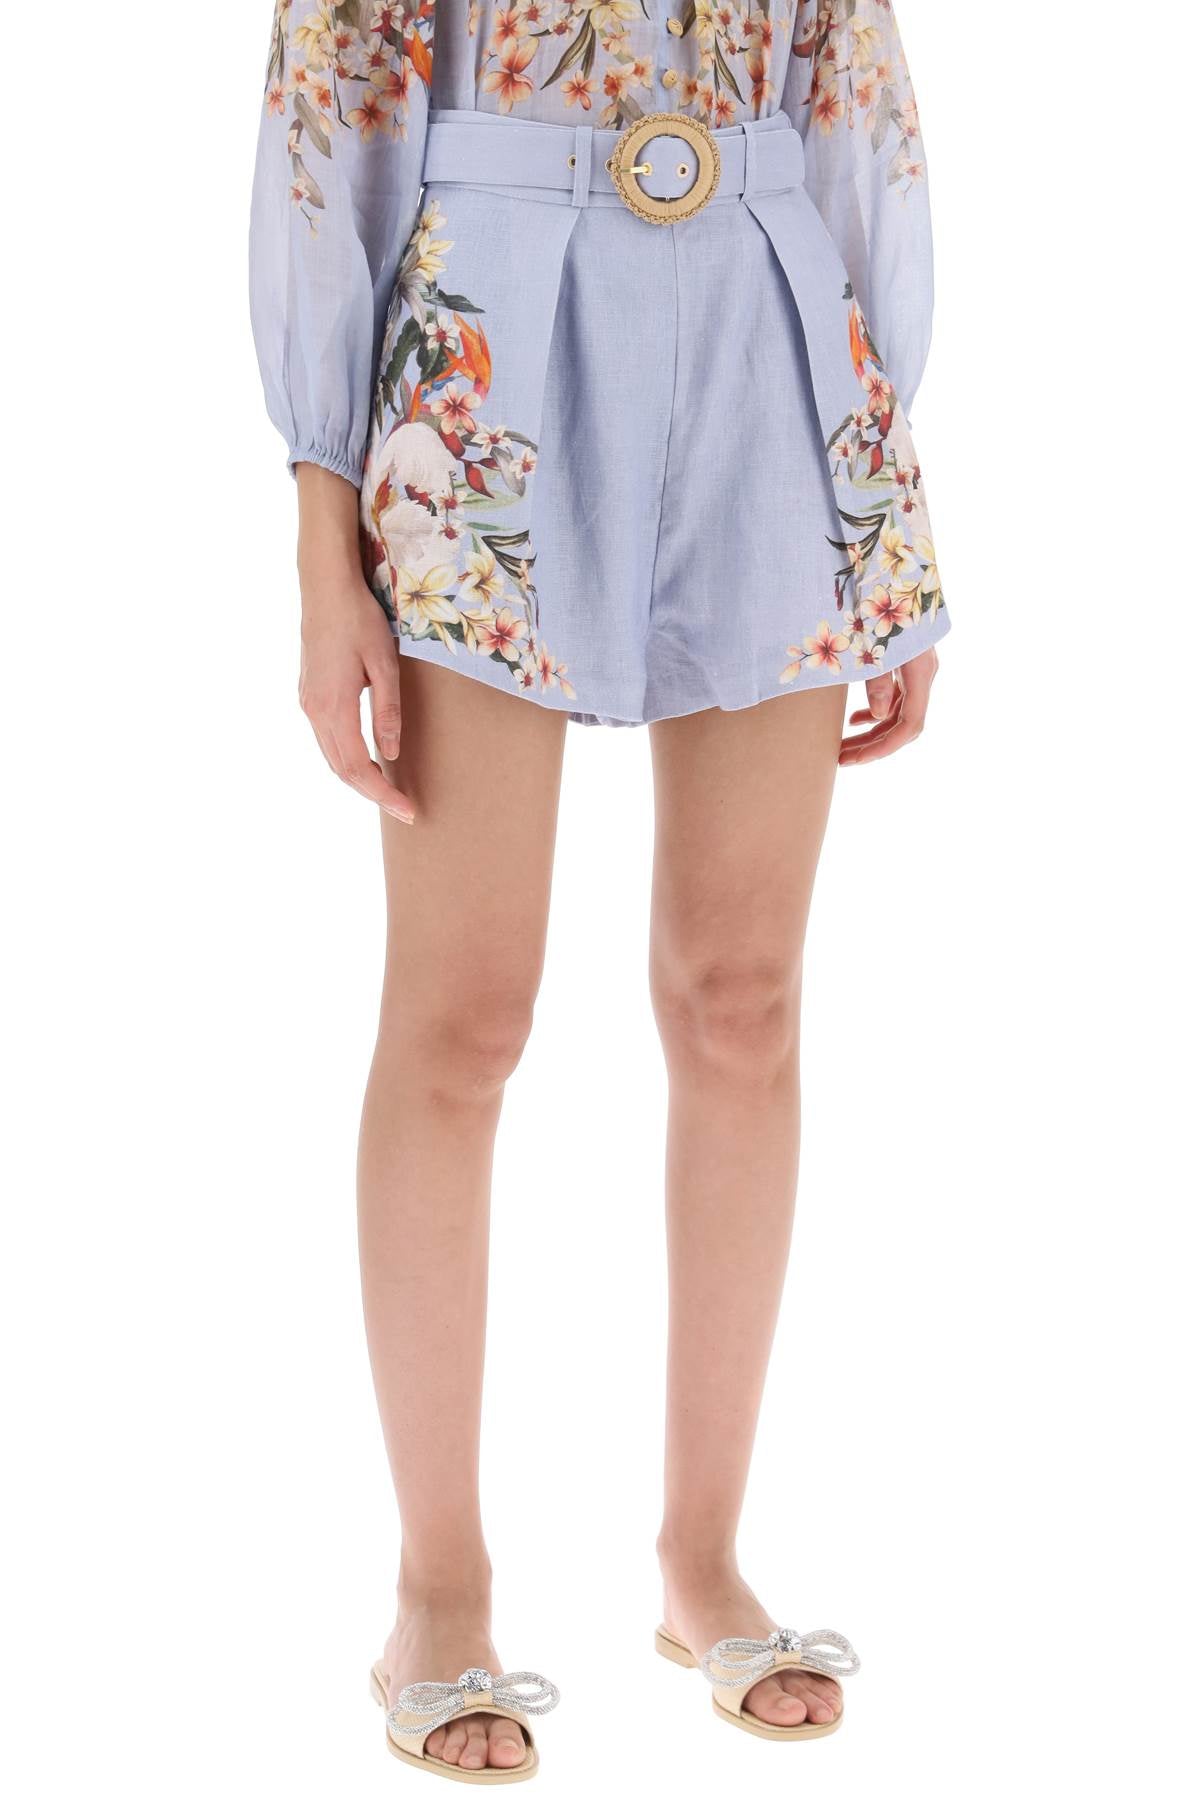 Zimmermann lexi tuck linen shorts with floral motif-1